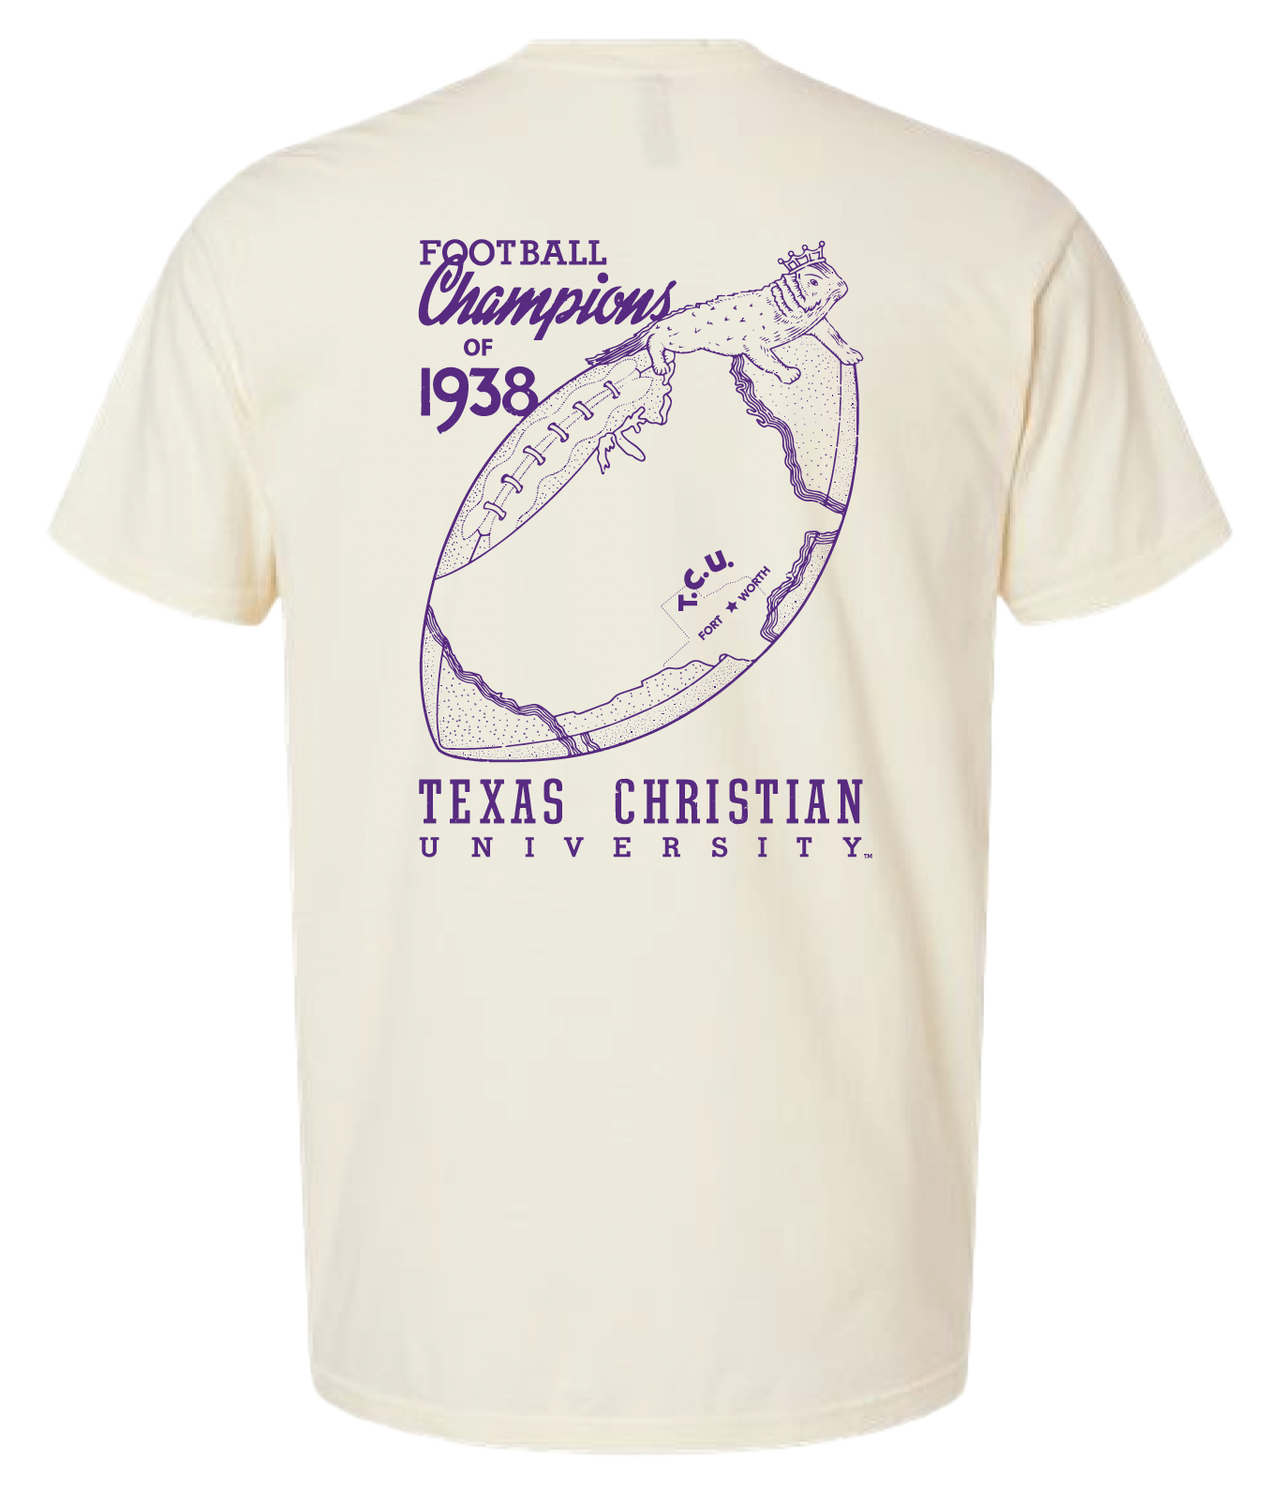 Football Champions of 1938 T-Shirt